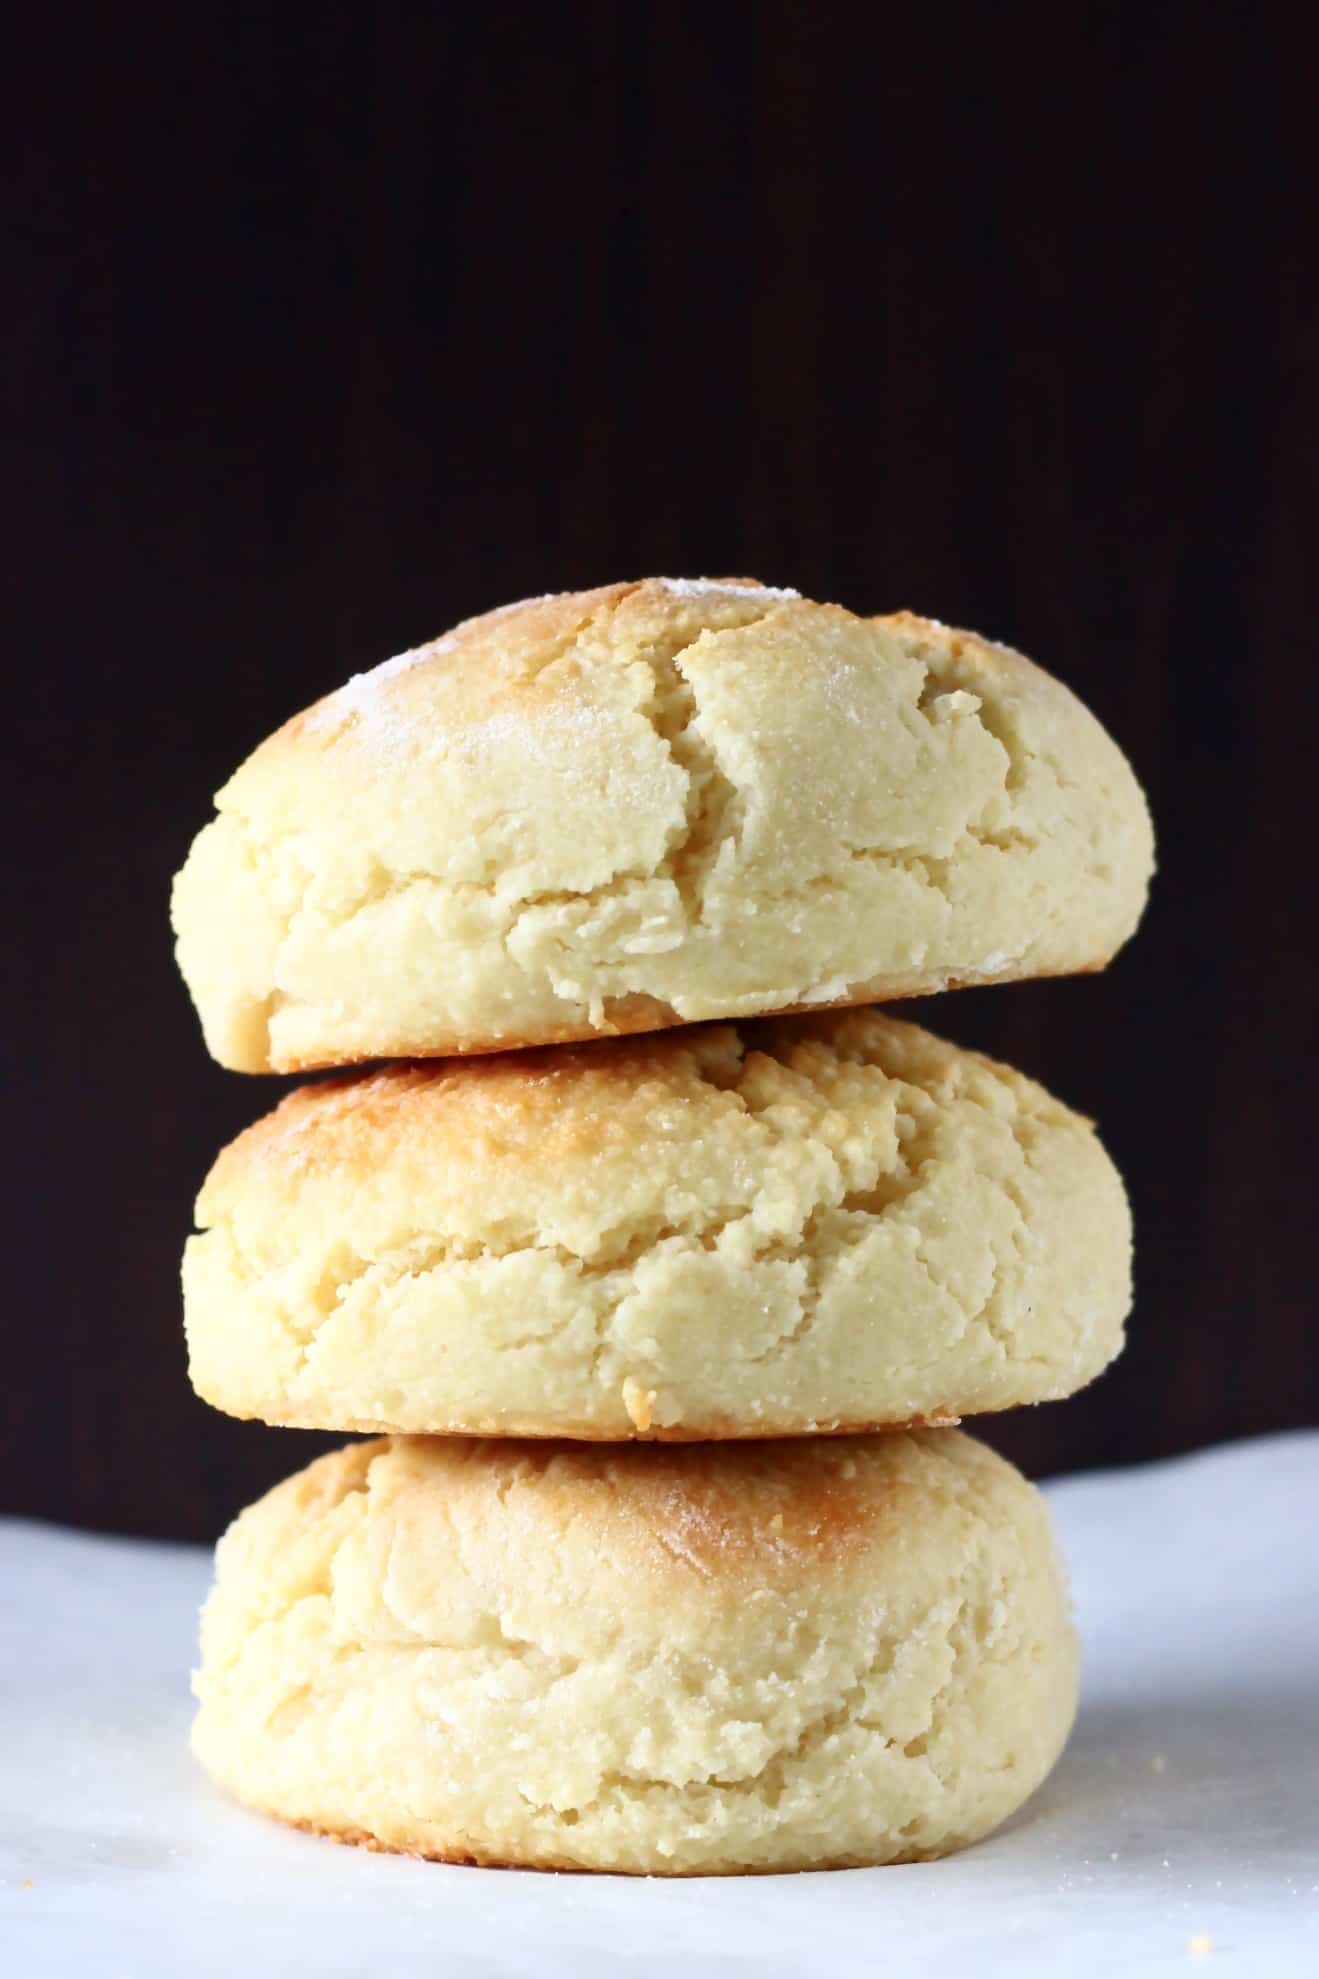 Three gluten-free vegan biscuits on top of each other against a dark brown background